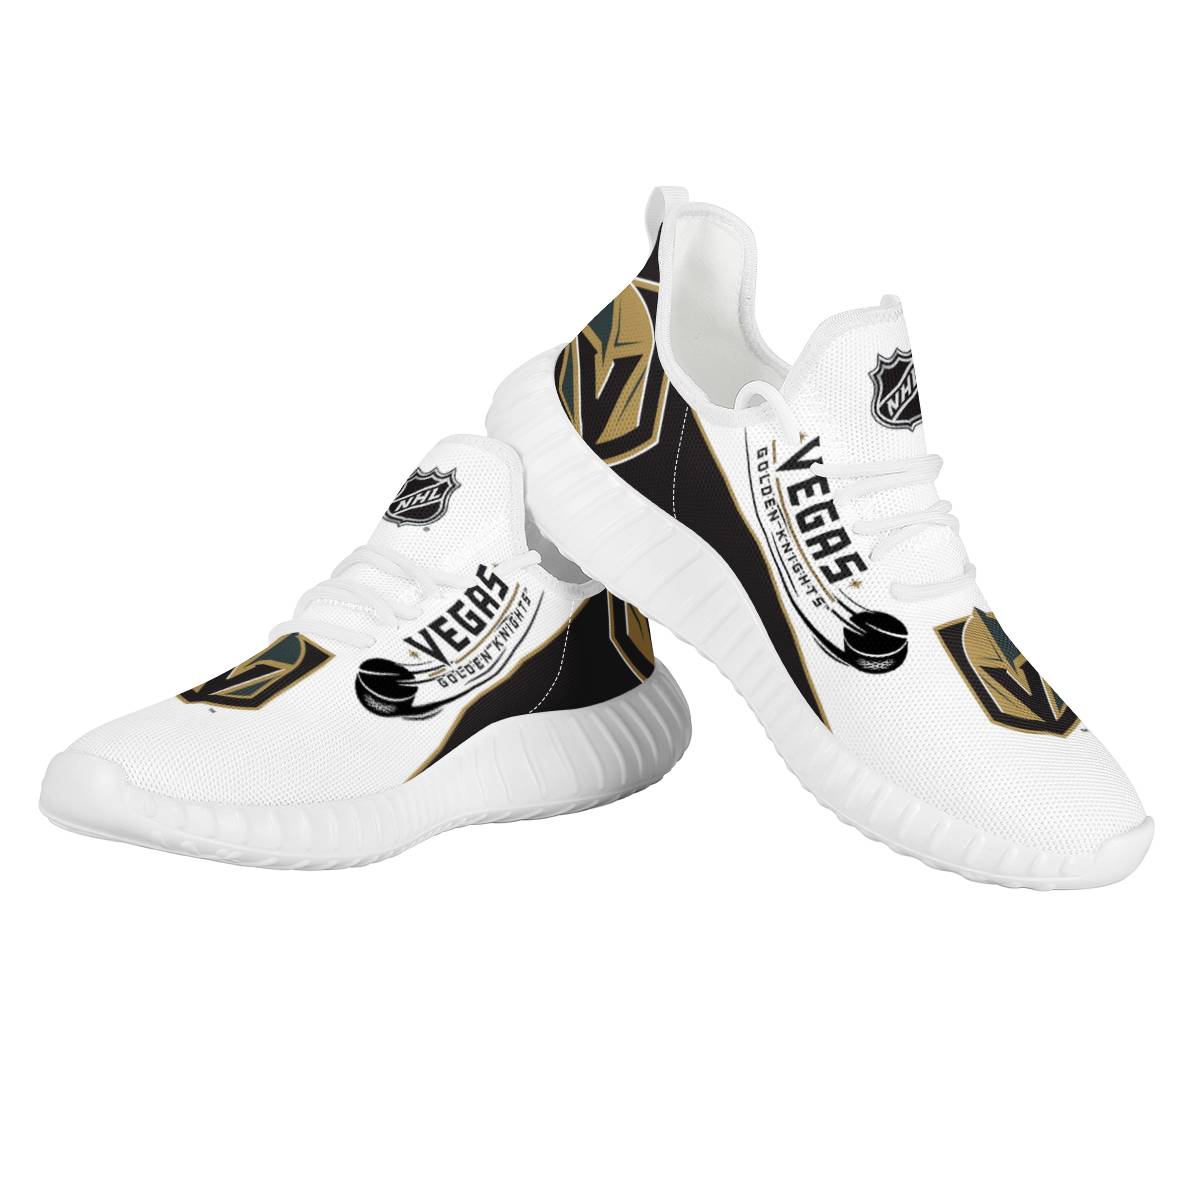 Men's Vegas Golden Knights Mesh Knit Sneakers/Shoes 001